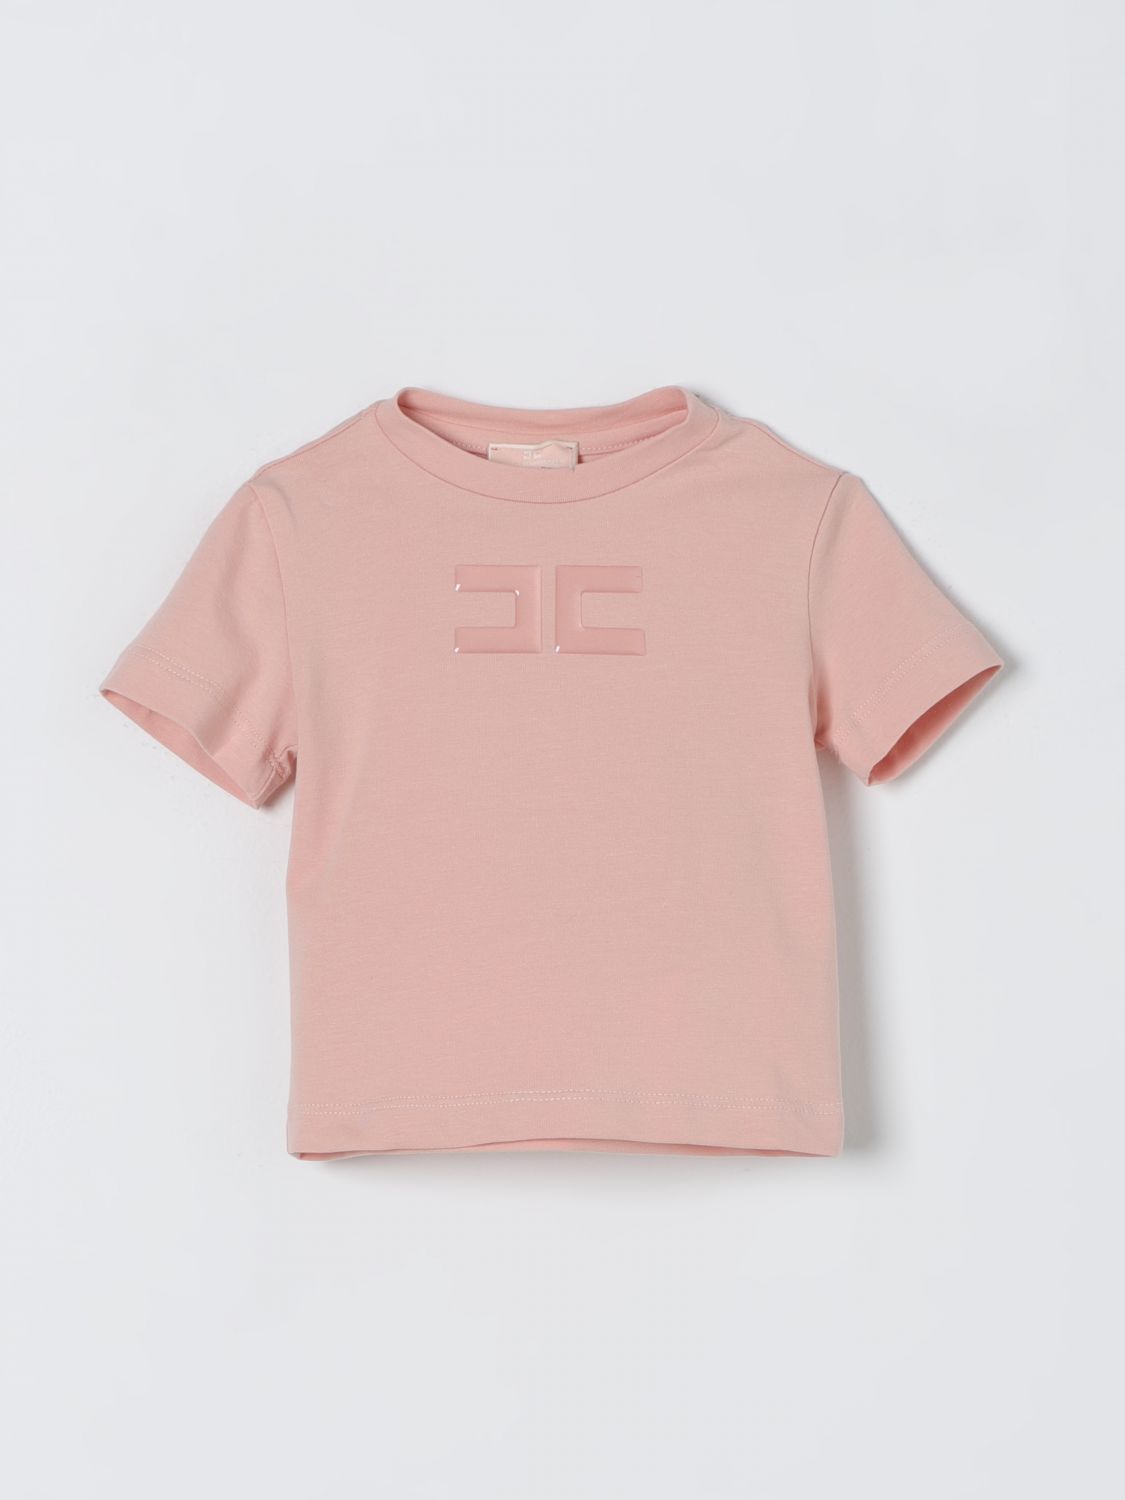 Shop Elisabetta Franchi La Mia Bambina T-shirt  Kids Color Pink